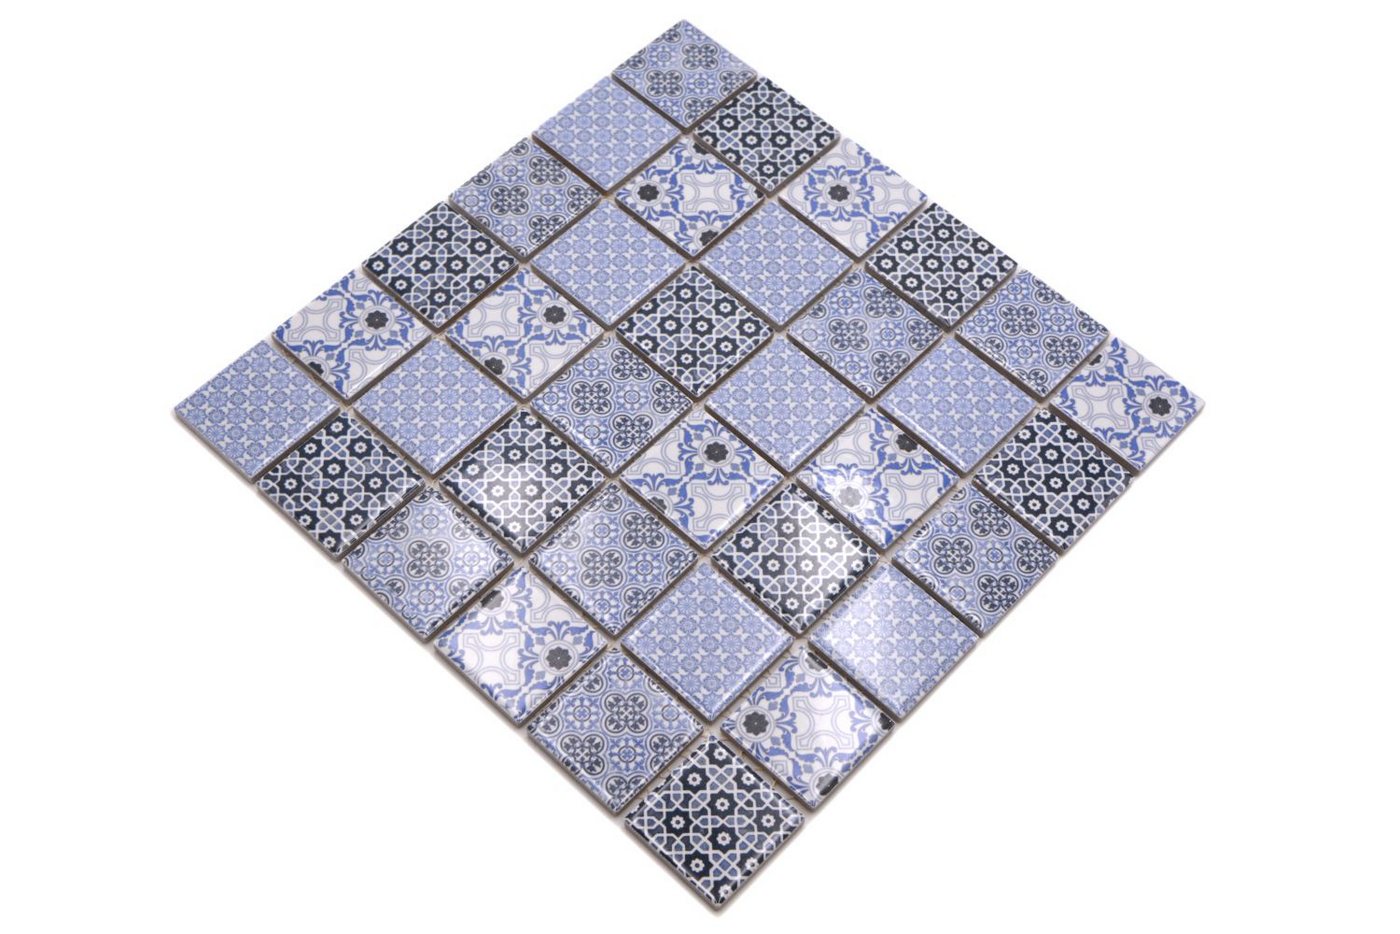 Mosani Mosaikfliesen Keramikmosaik Mosaikfliesen blau glänzend / 10 Mosaikmatten von Mosani